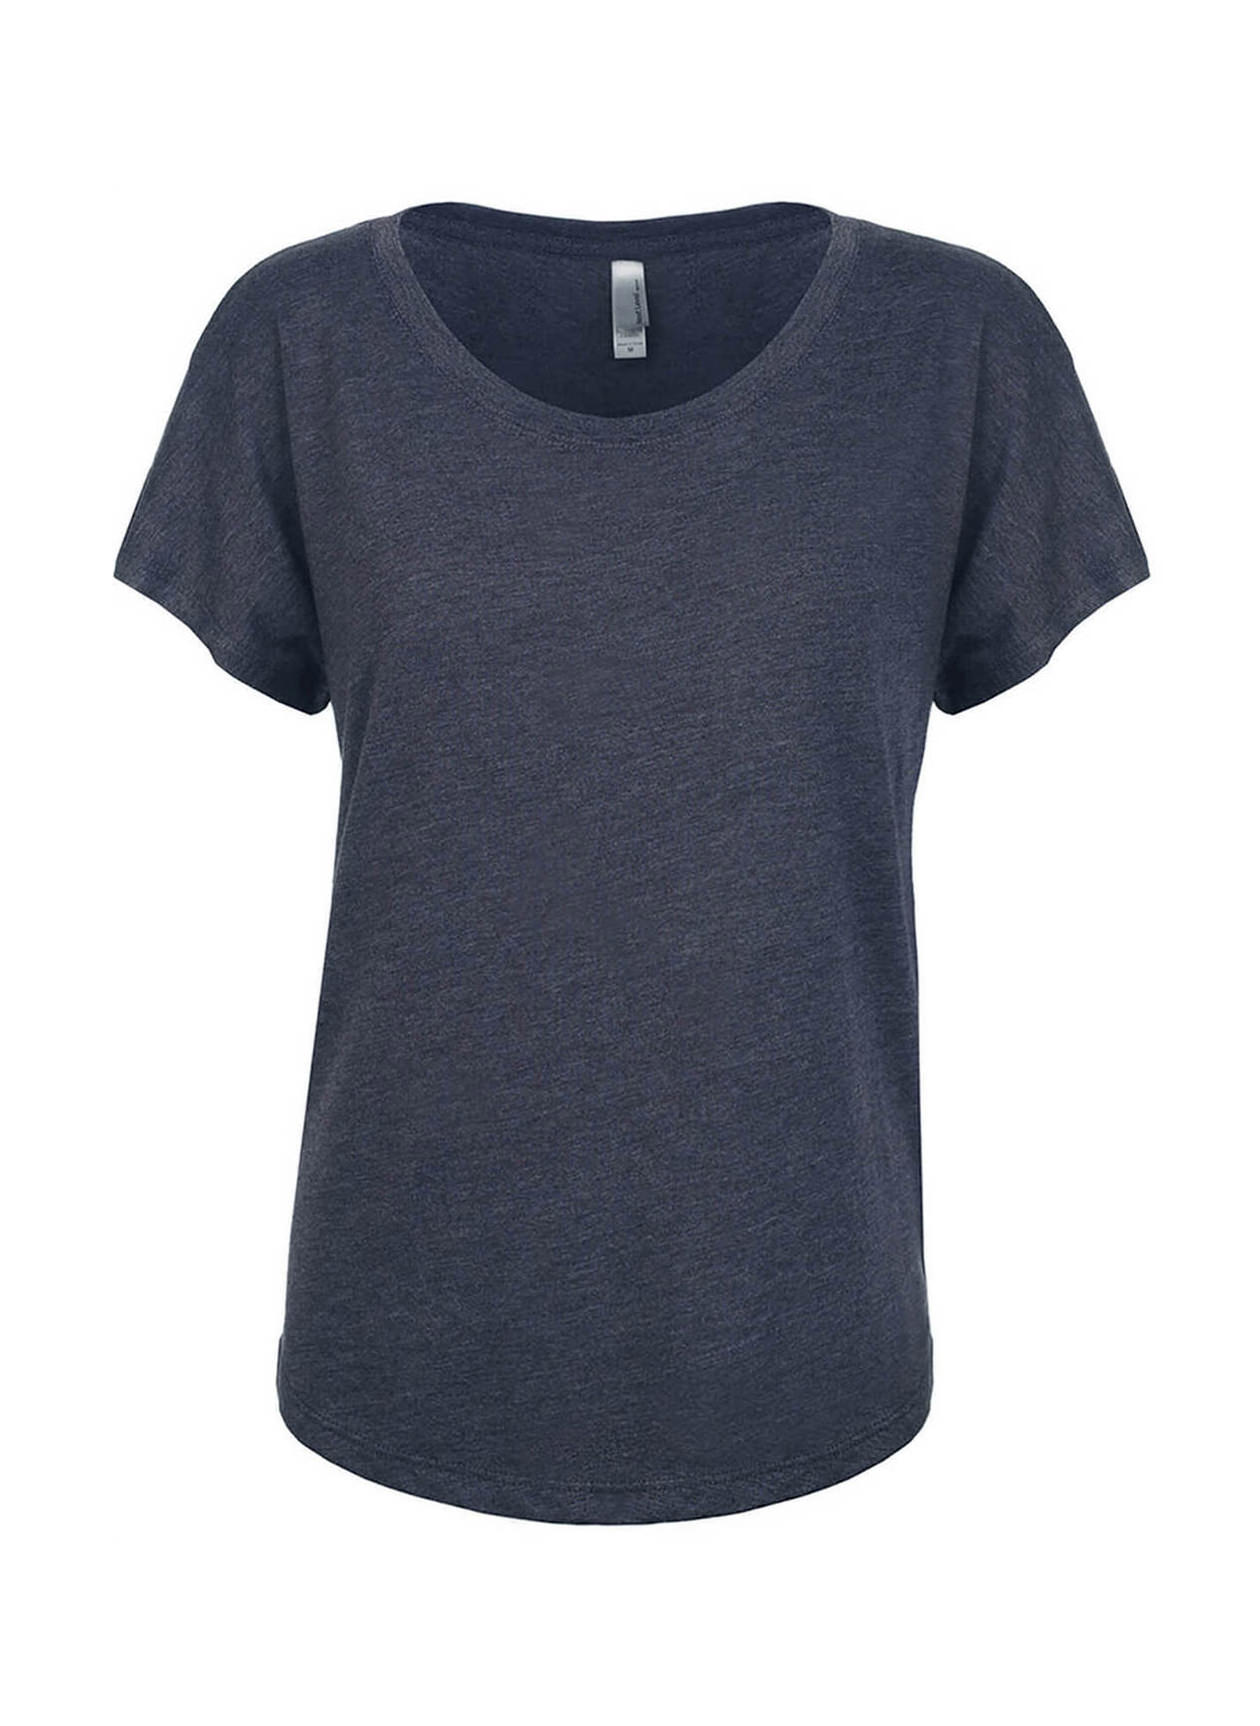 Next Level Women's Vintage Navy Triblend Dolman T-Shirt